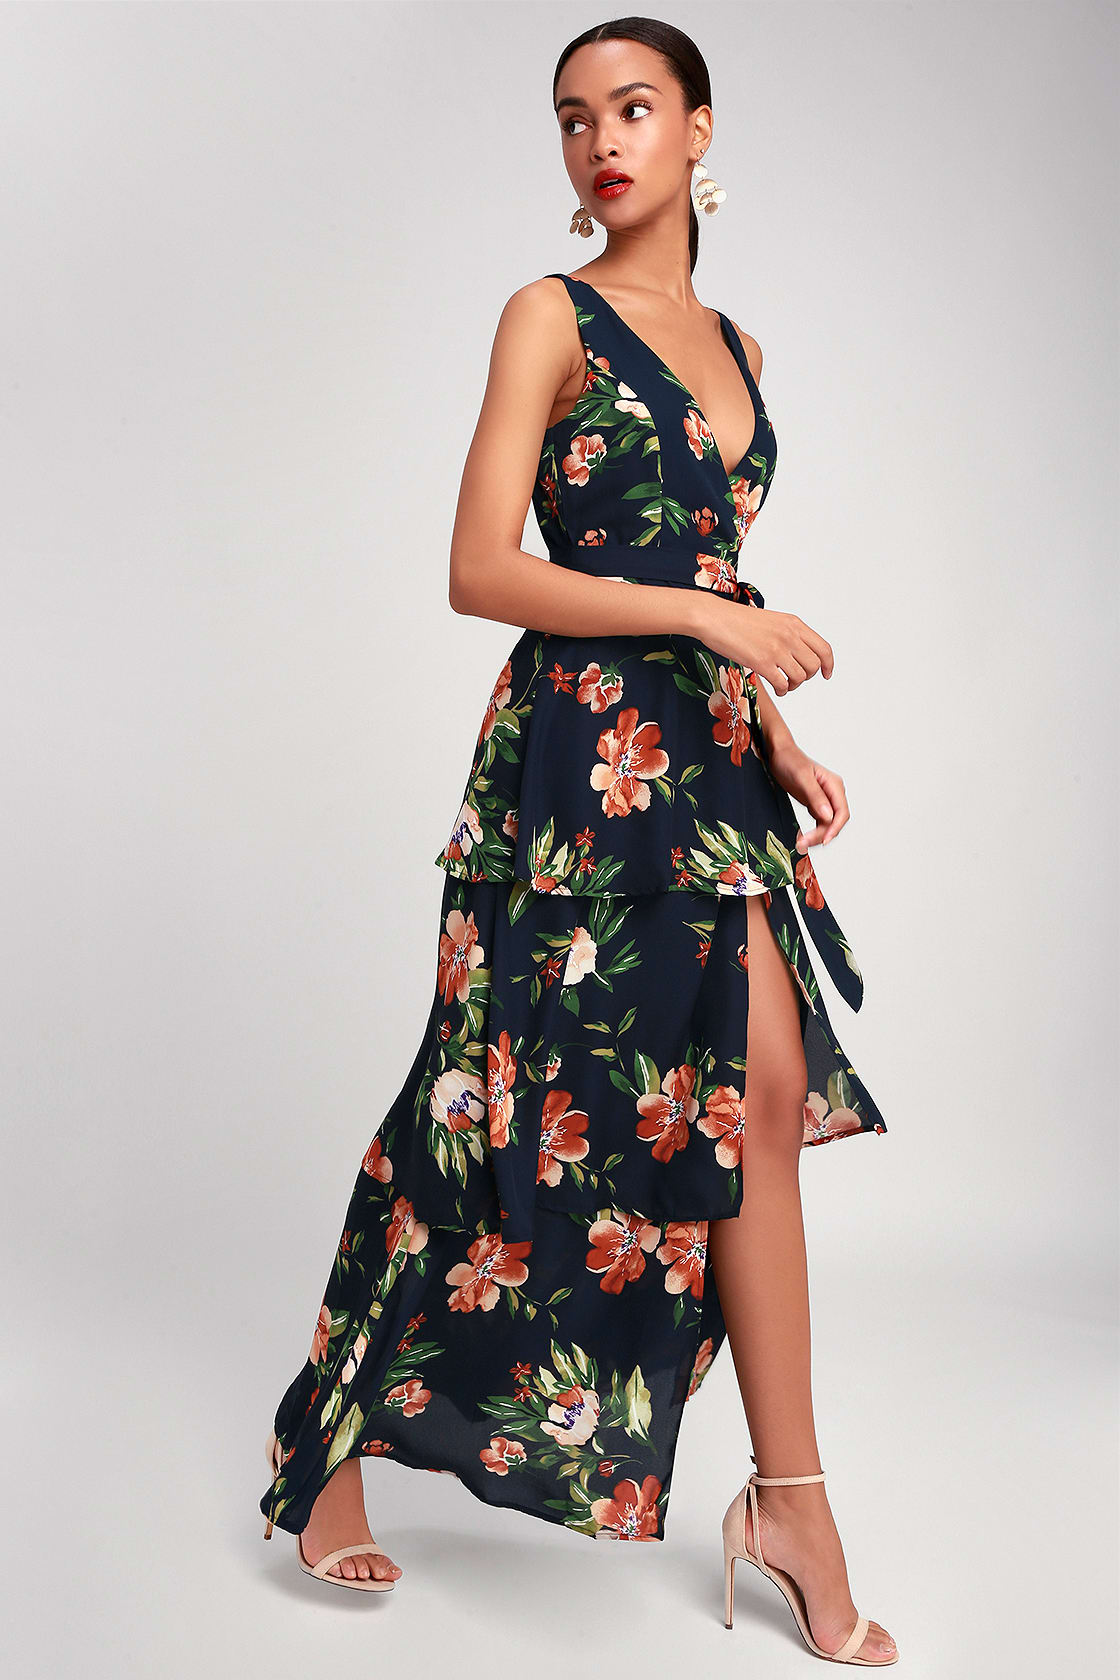 Sweet Navy Blue Dress - Floral Print Maxi Dress - Wrap Maxi Dress - Lulus